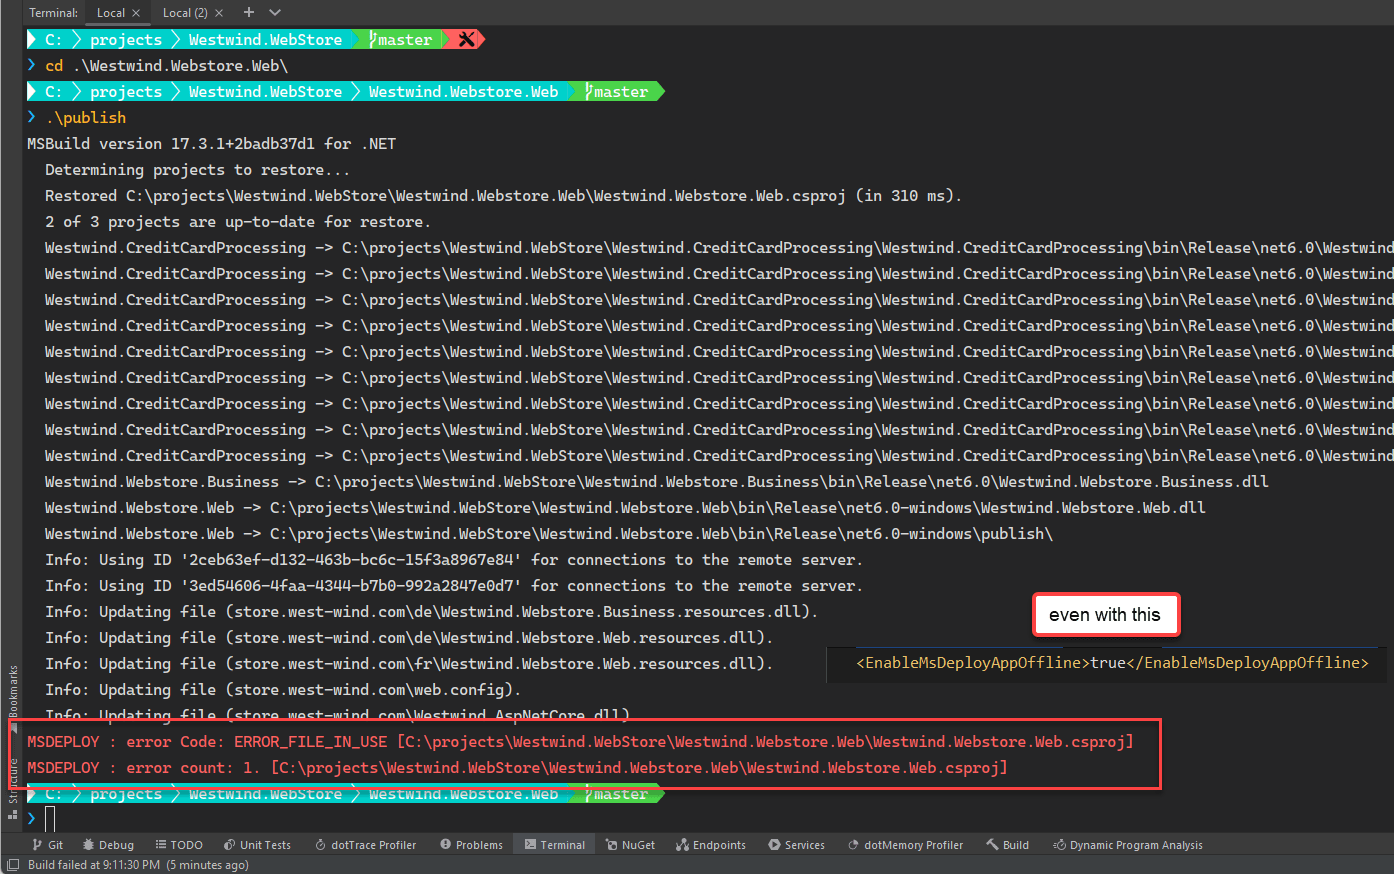 MSDeploy publish error on the Command Line